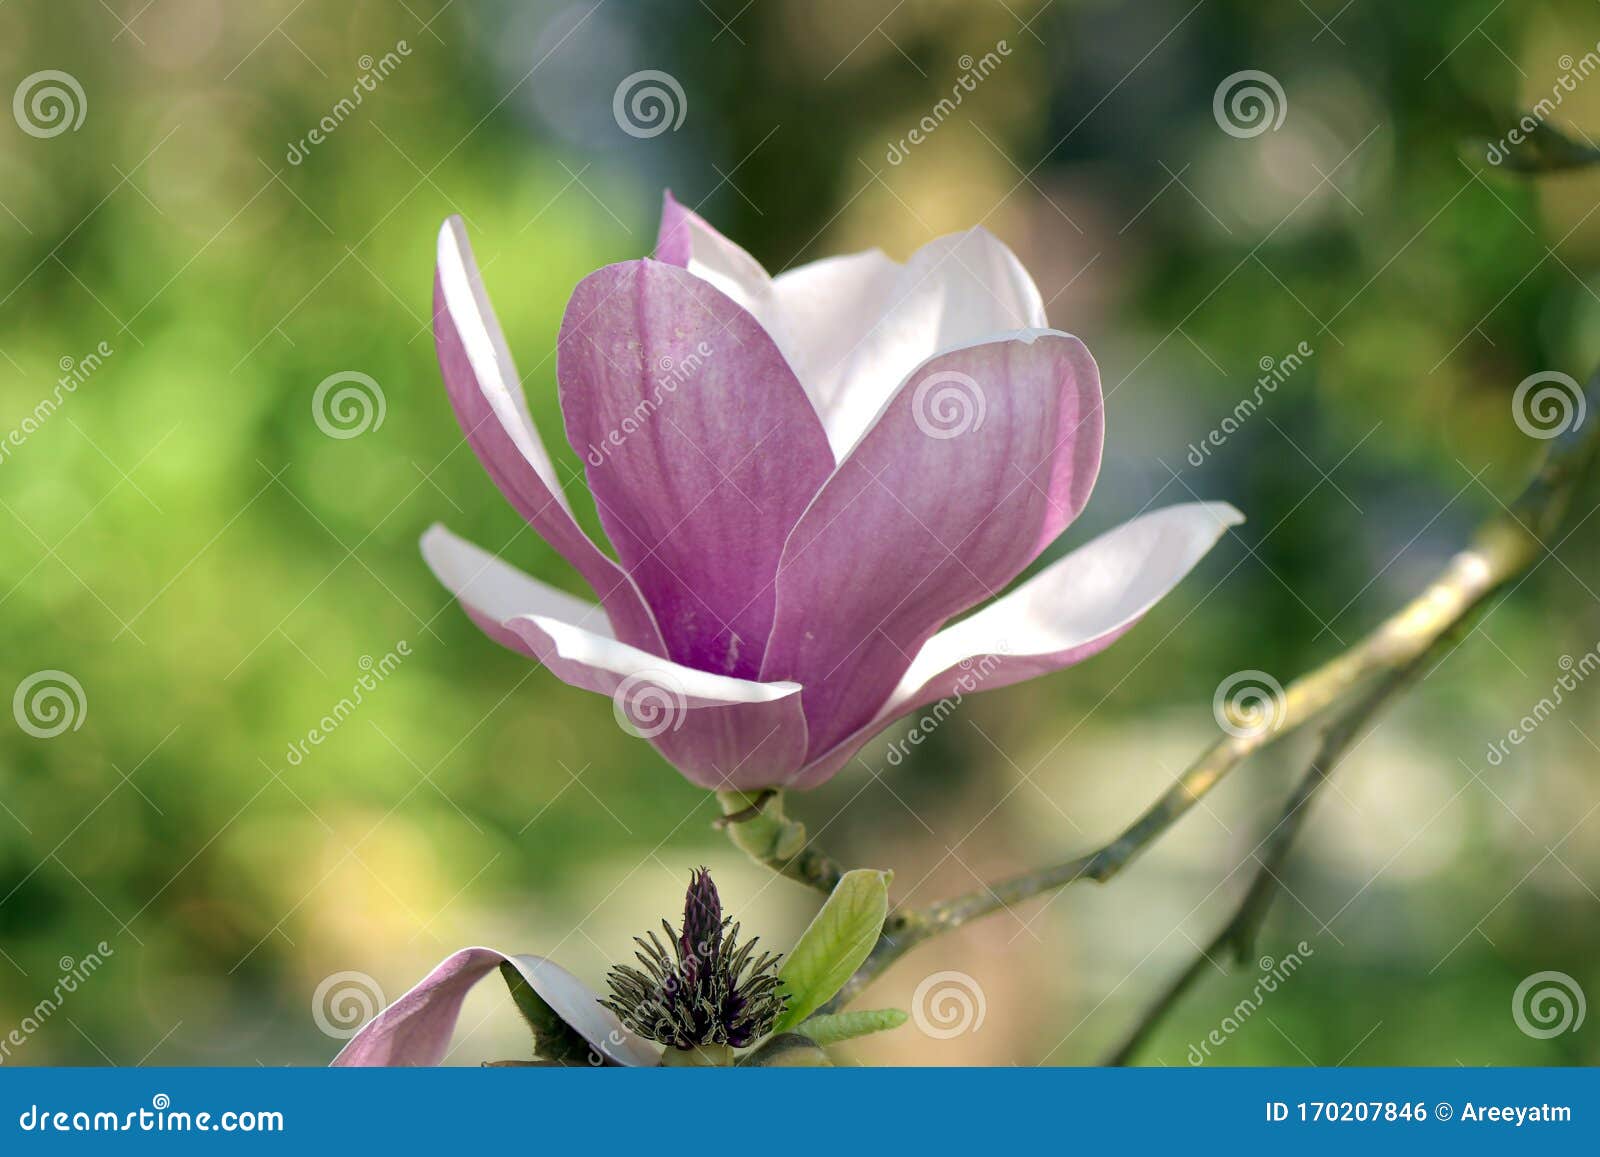 pink magnolia magnolia liliiflora. or tulip tree